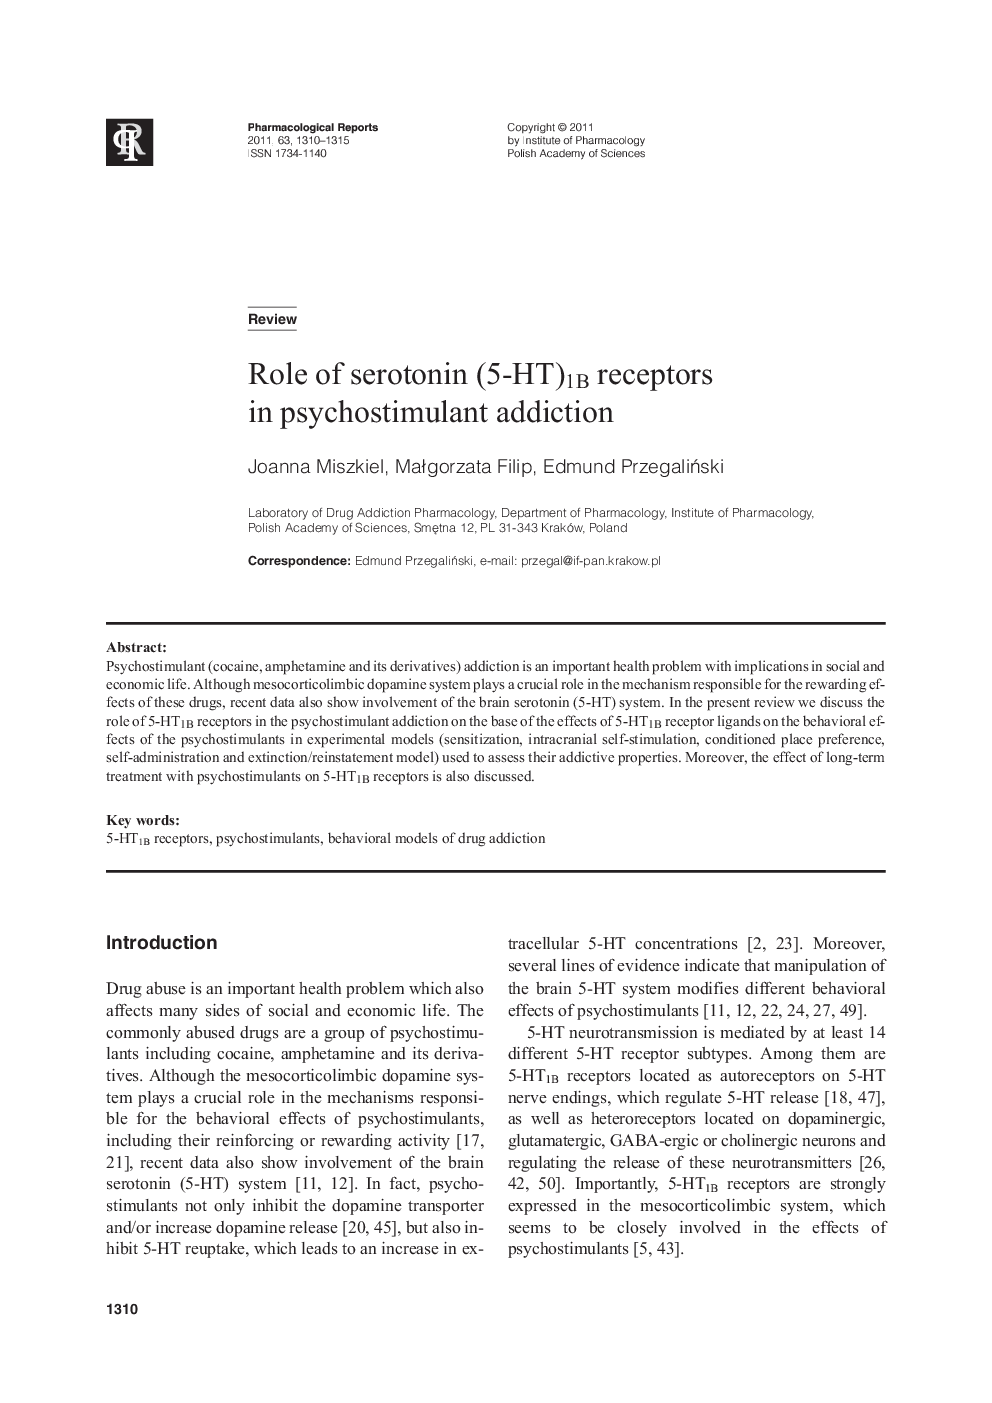 Role of serotonin (5-HT)1B receptors in psychostimulant addiction